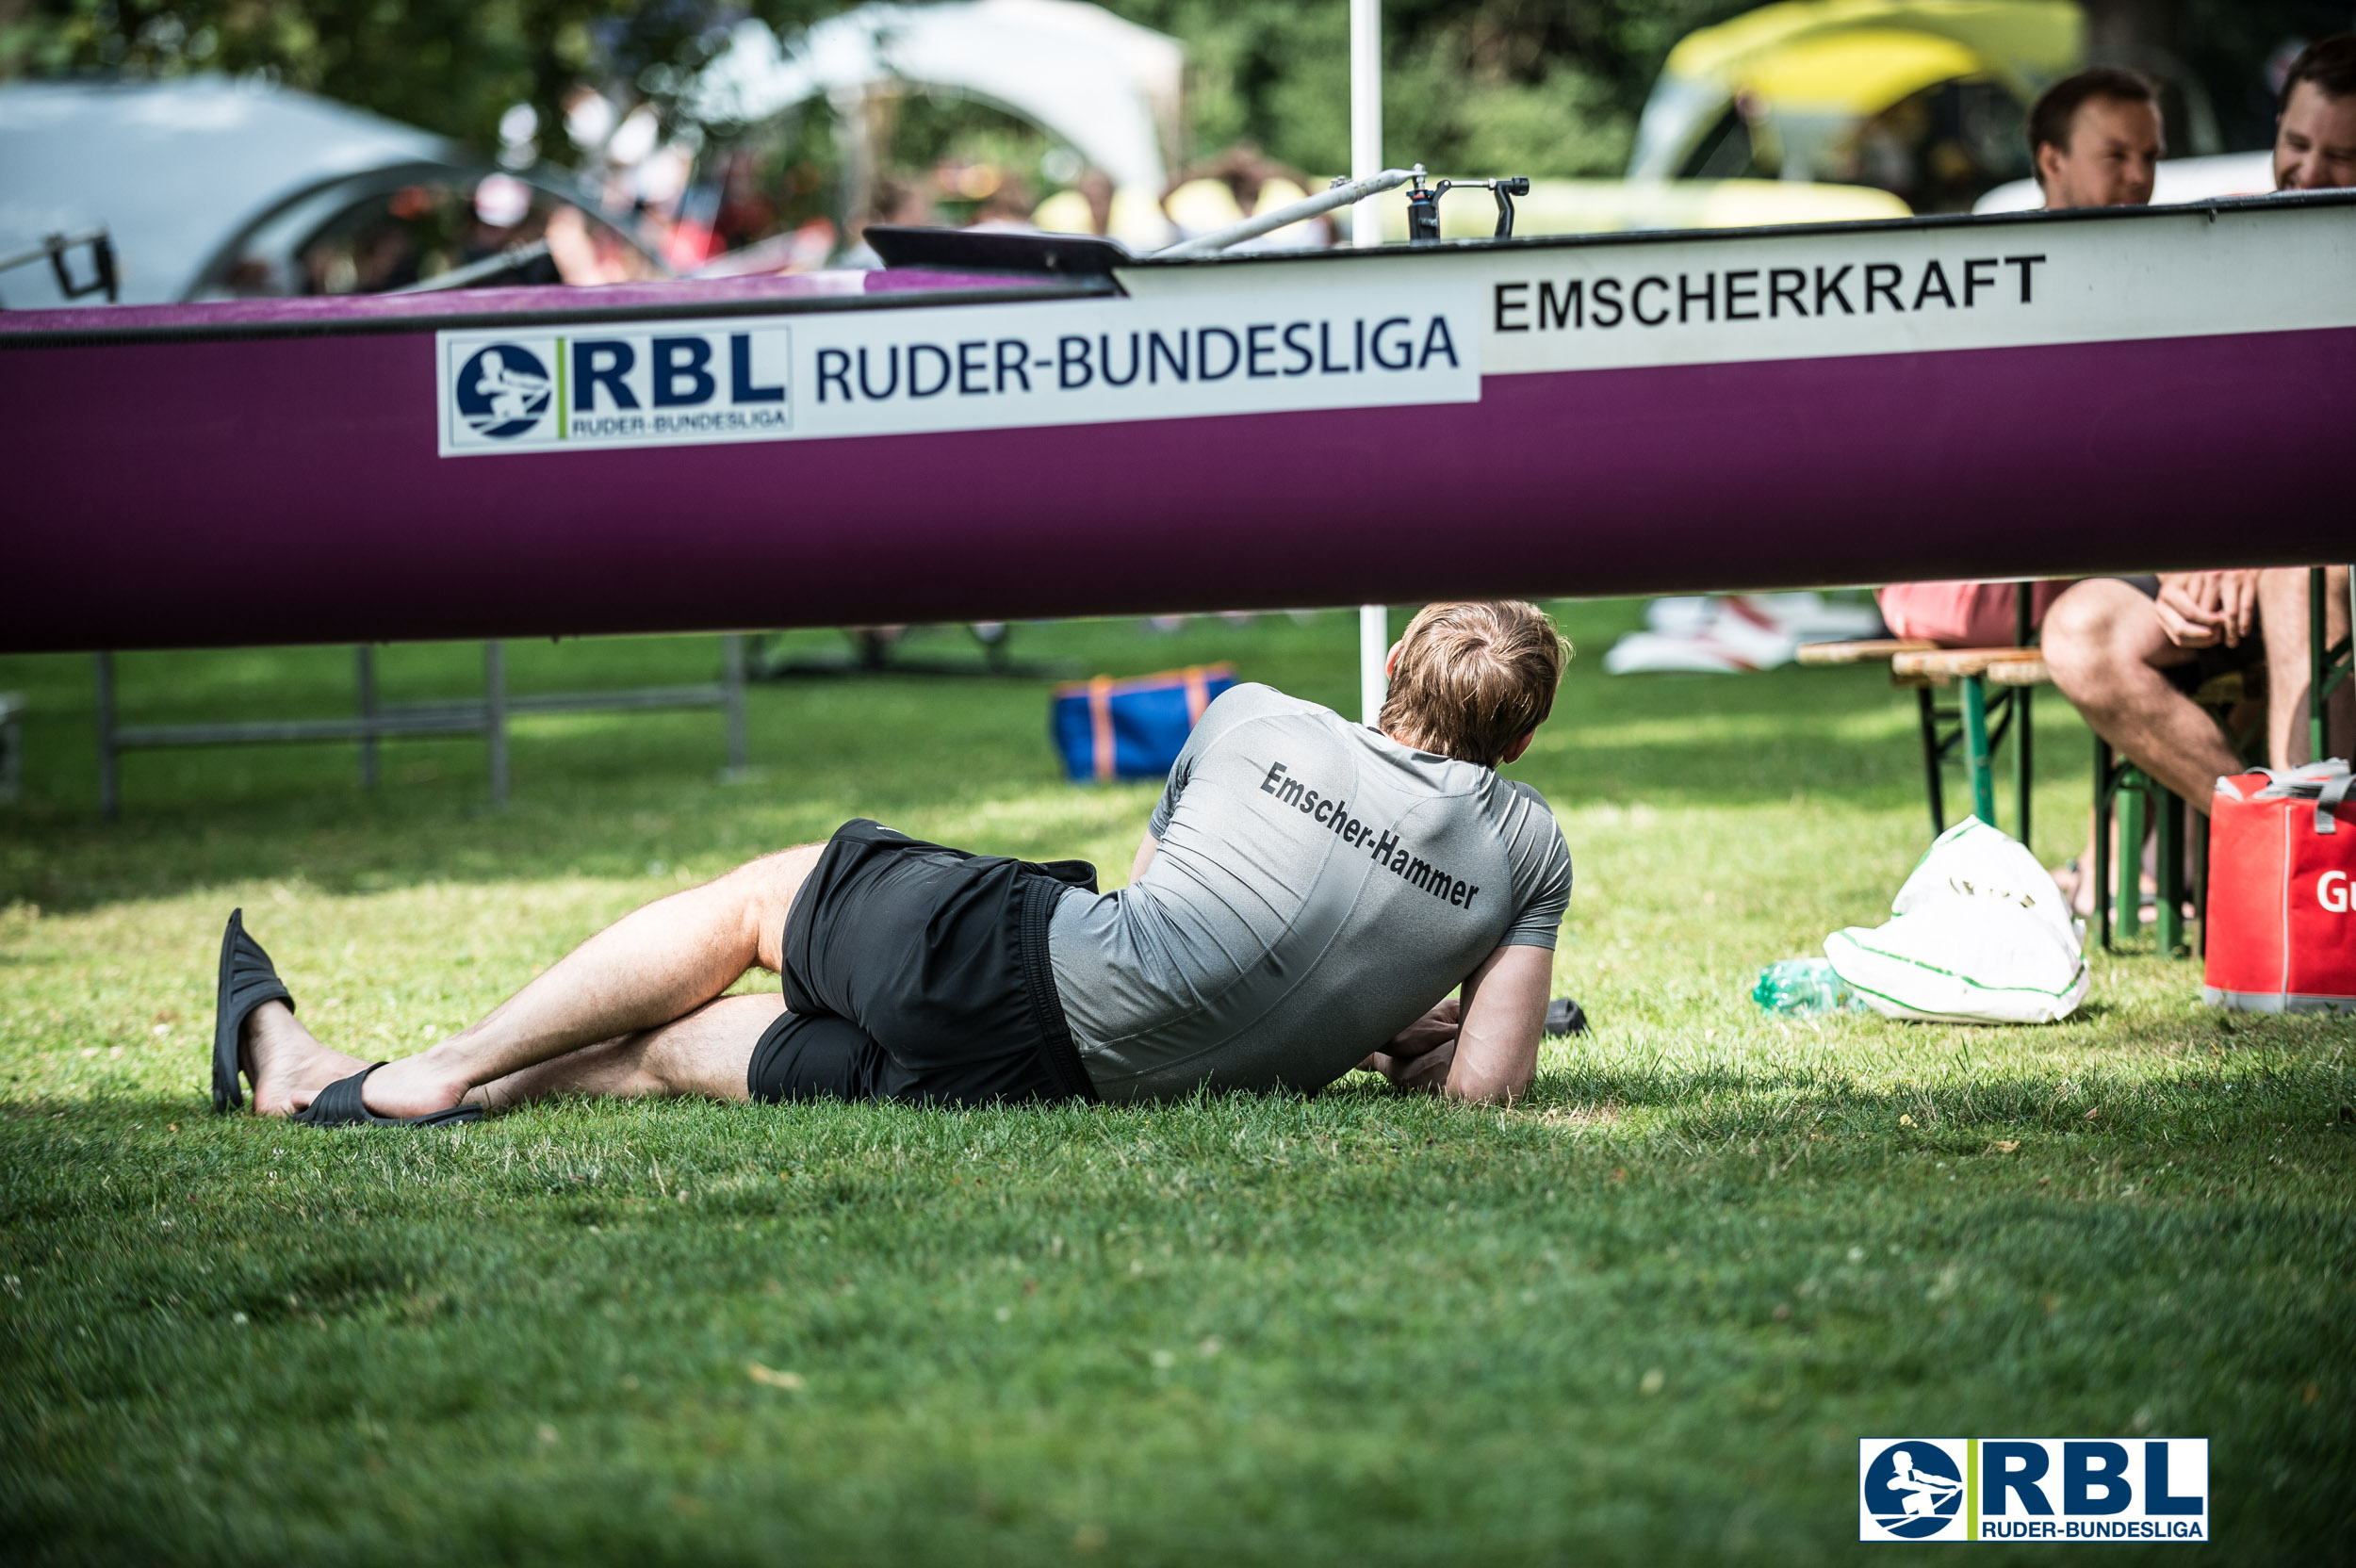 Dateiname: _1712090 - Foto © Alexander Pischke/Ruder-Bundesliga